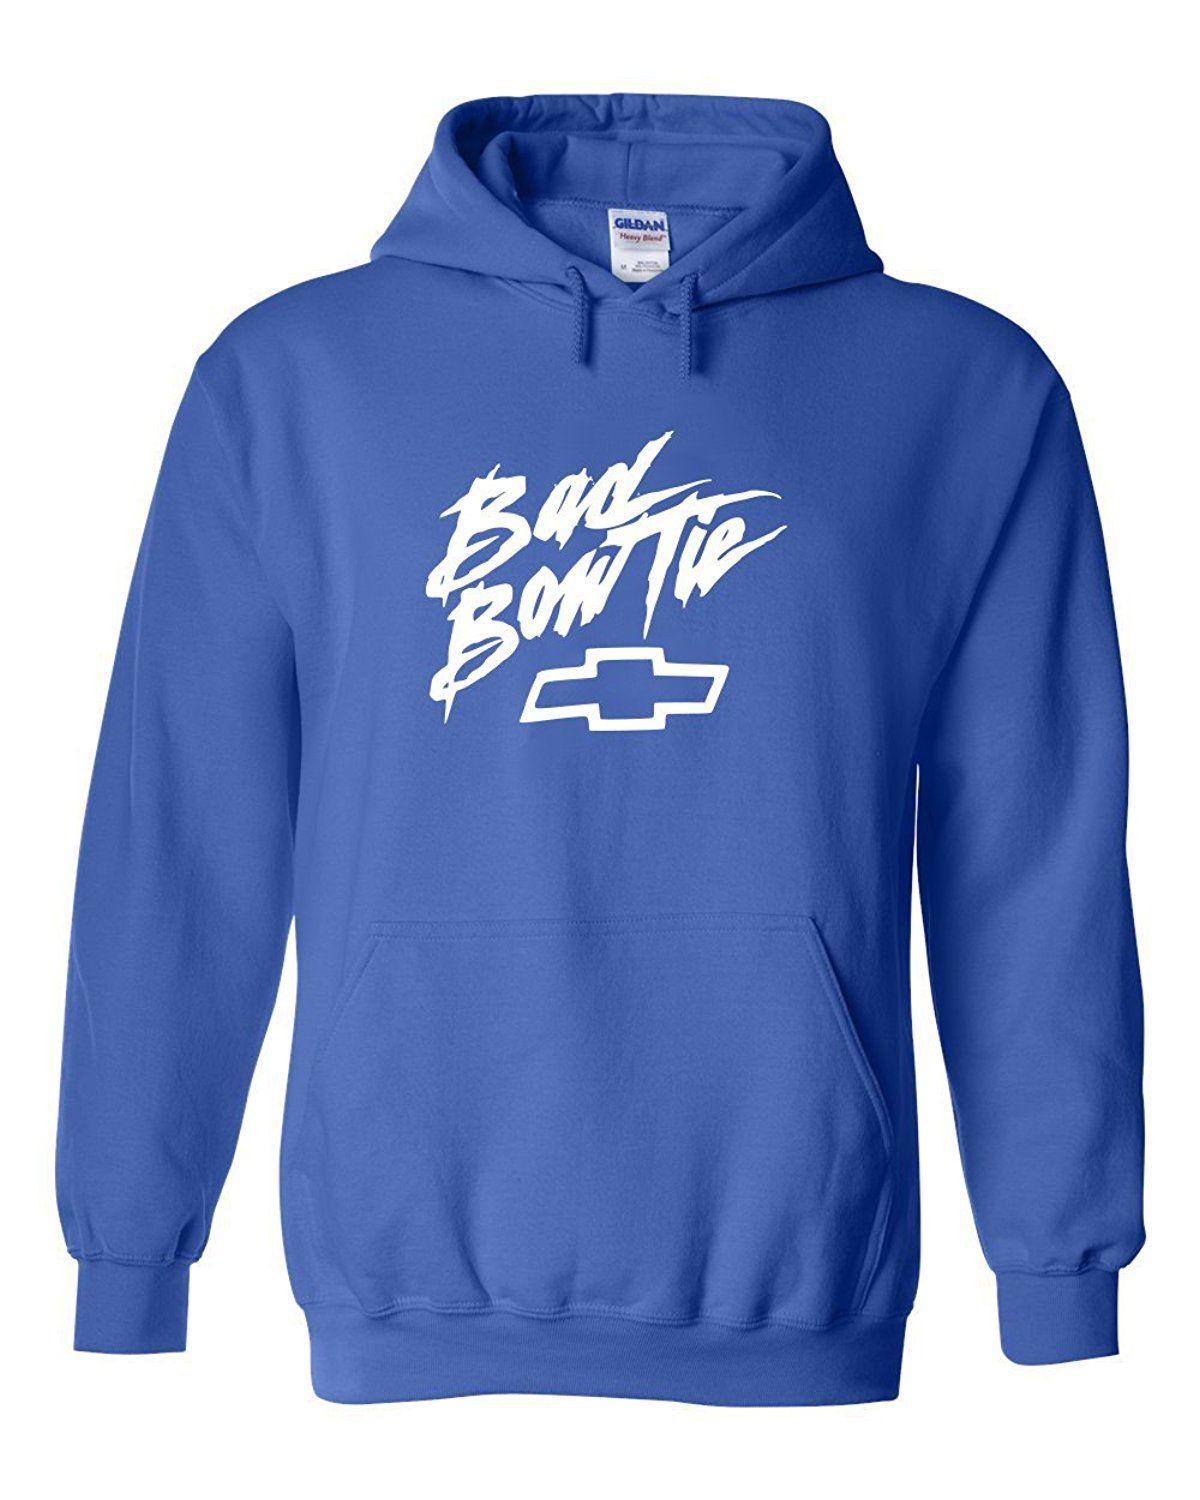 Bad Bowtie Logo - Bad Bowtie Hoodie. Chevy Fan Hooded Sweatshirt